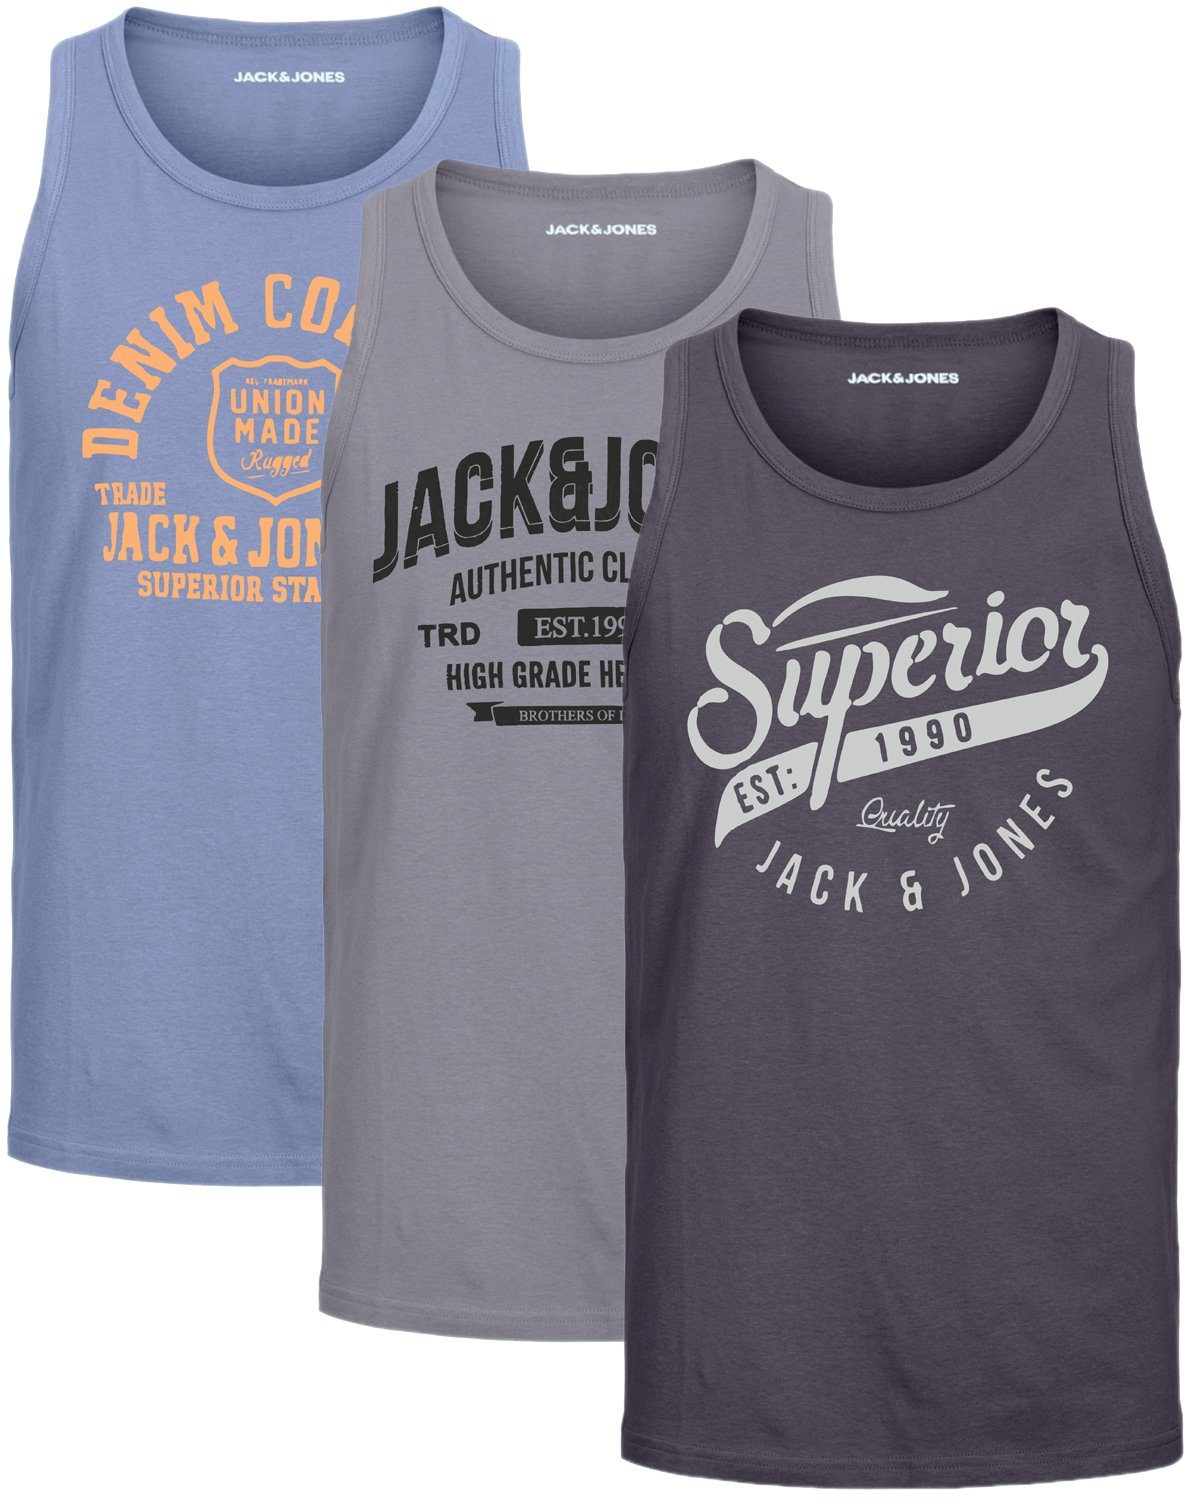 Jack & Jones Tanktop Bequemes Slimfit Shirt mit Printdruck (3er-Pack) unifarbenes Oberteil aus Baumwolle, Размер XL